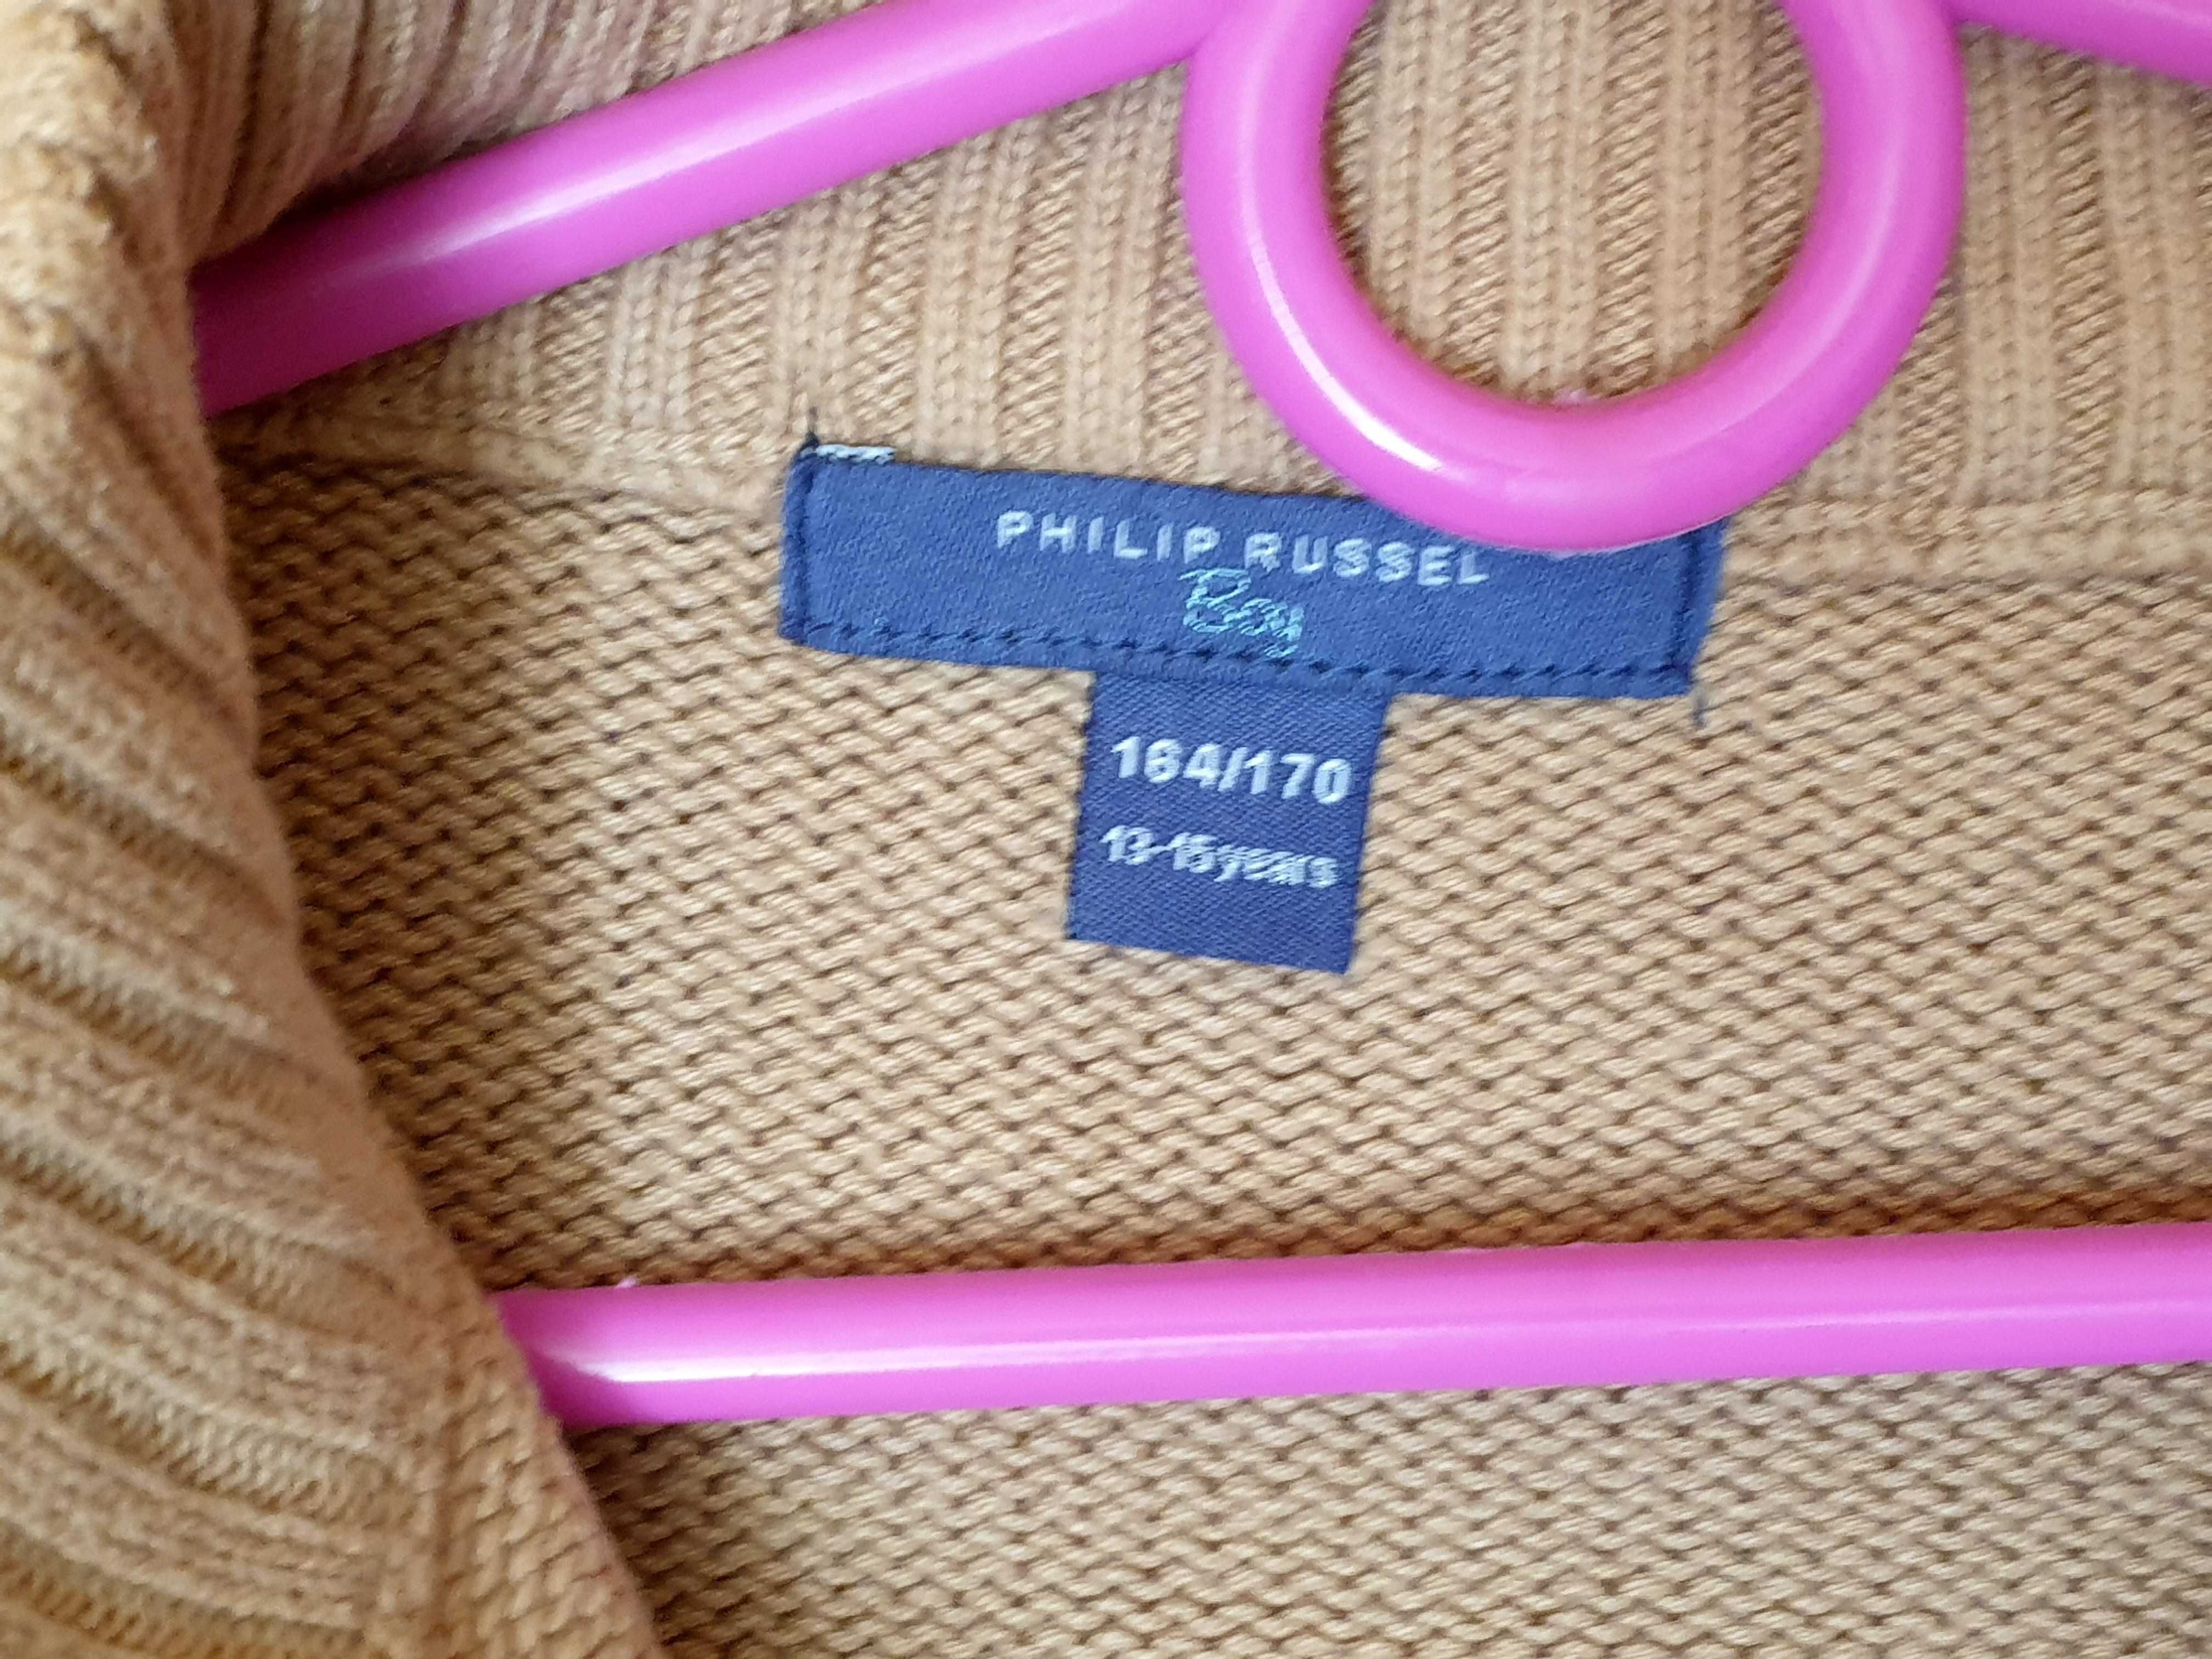 Philip Russel - beżowy sweter dla dziecka - 164-170 - 13-15 lat